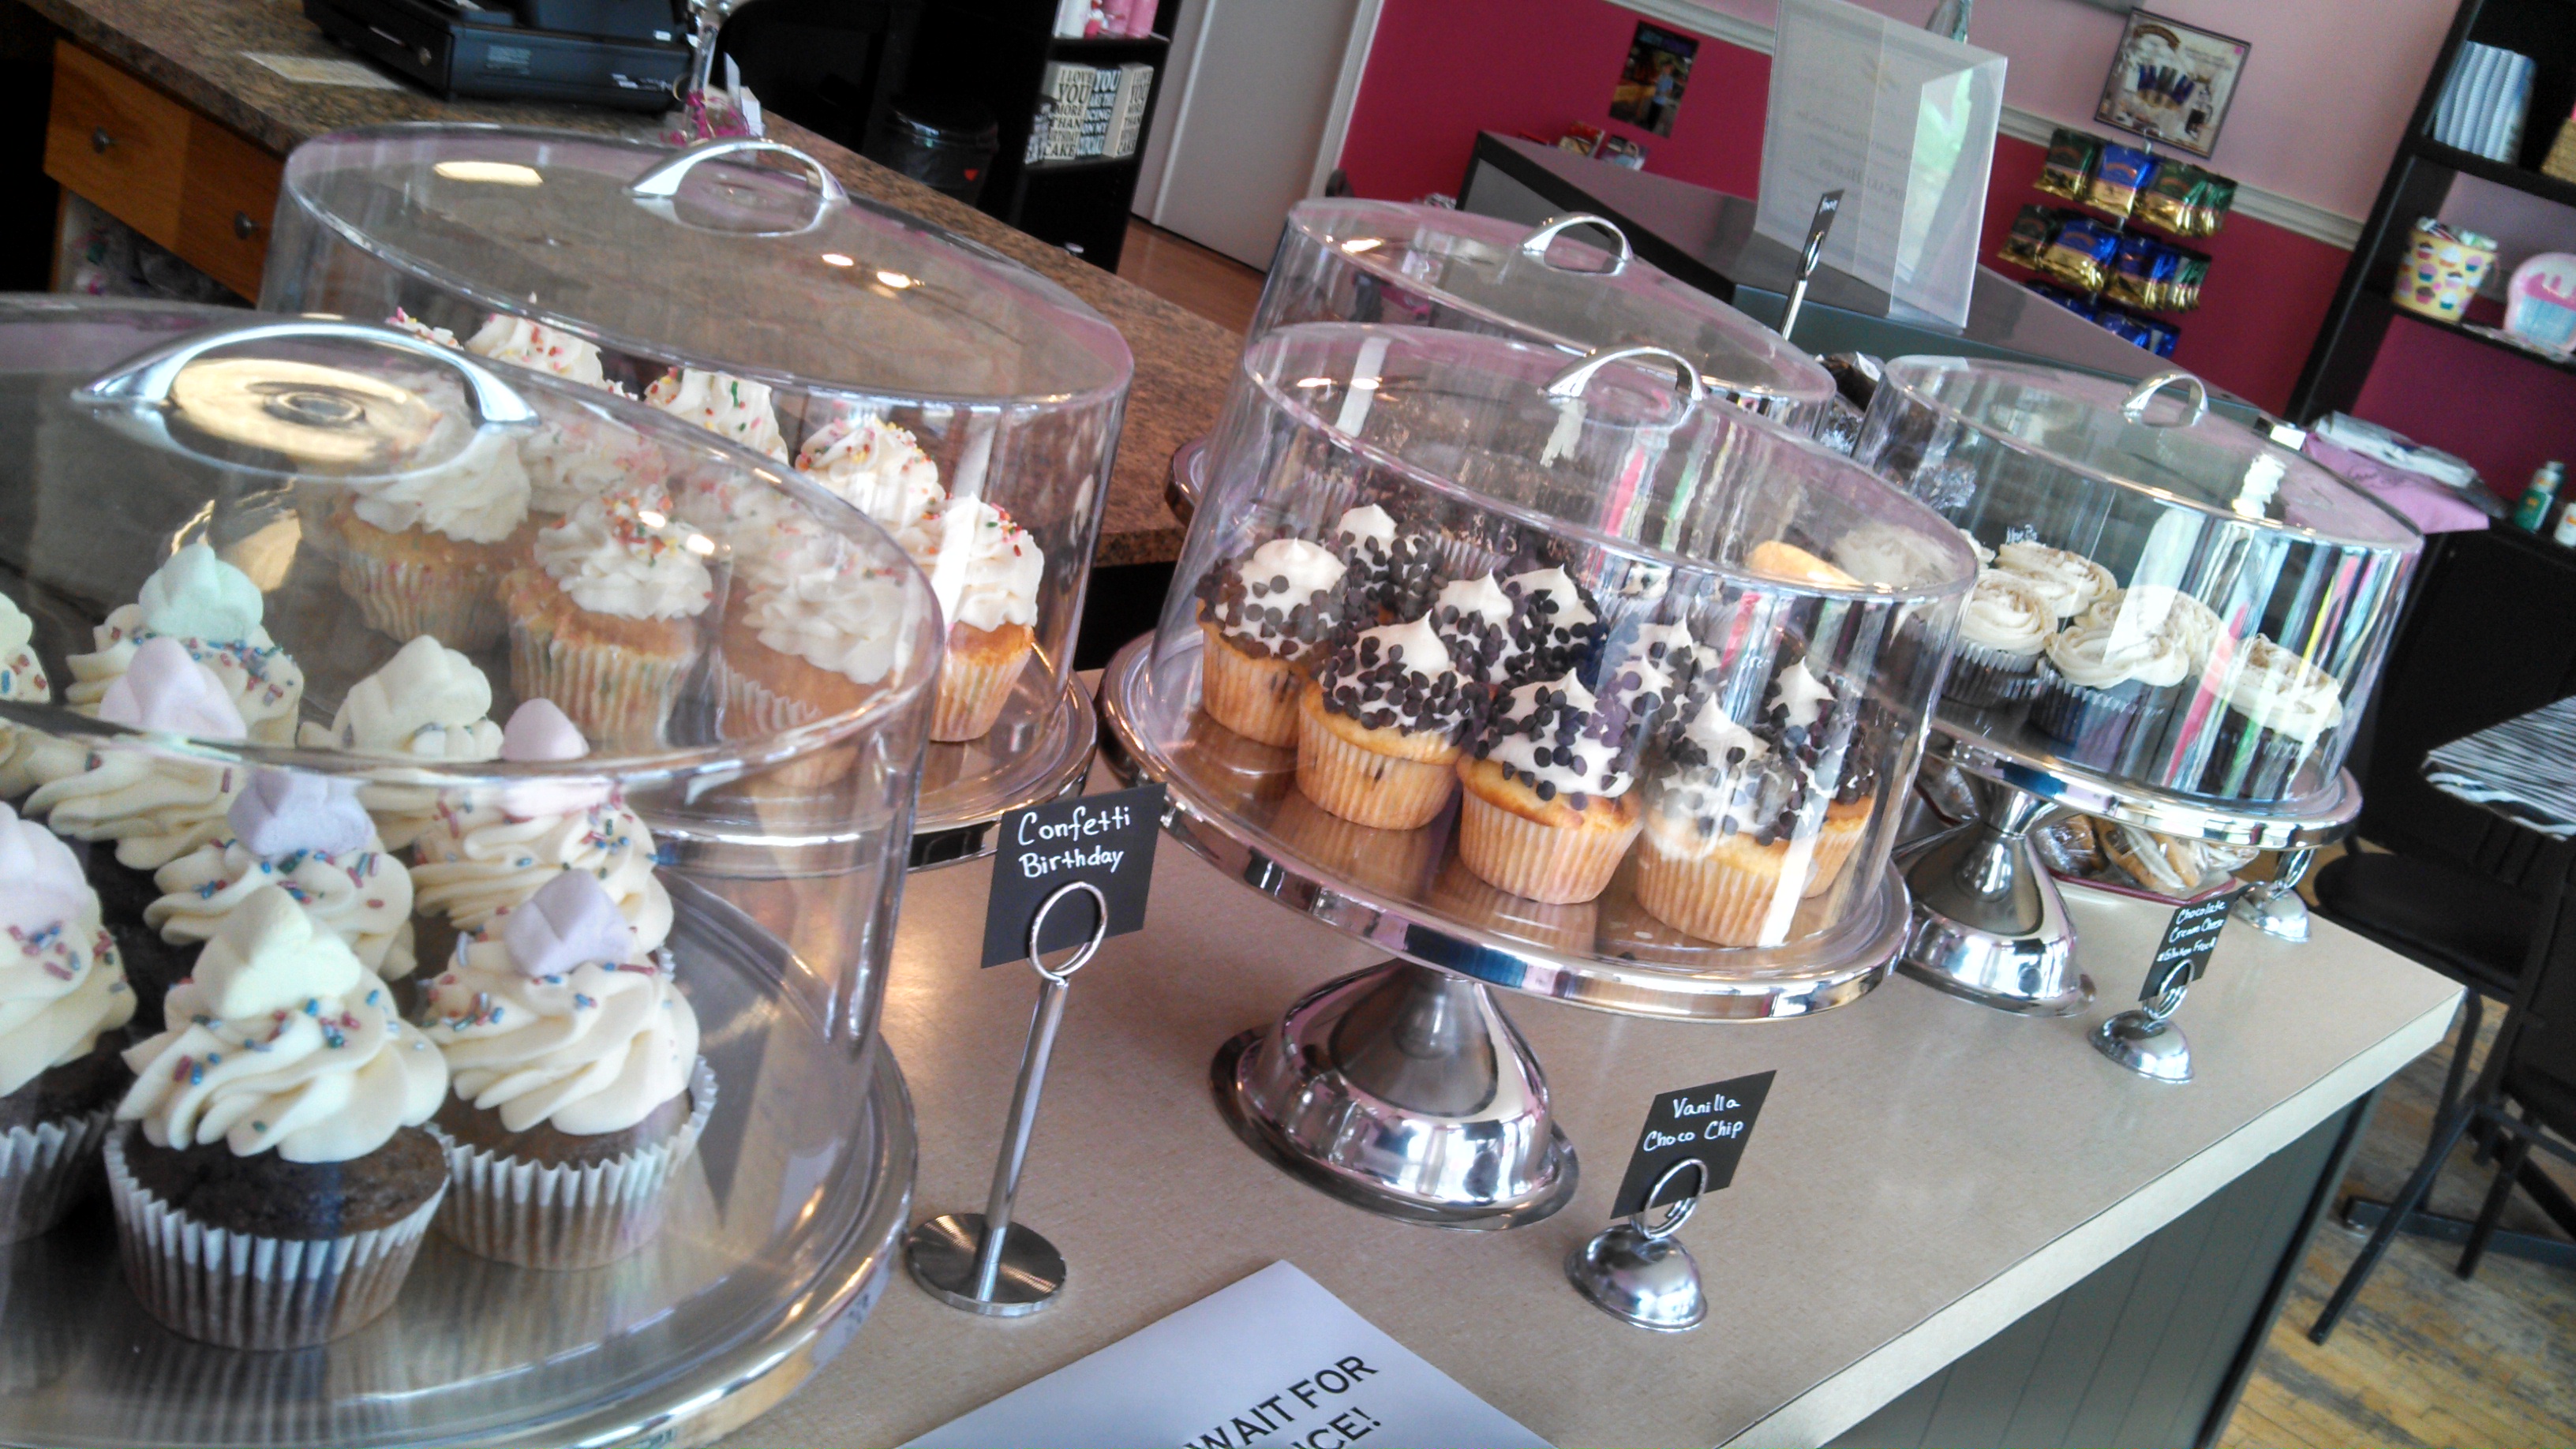 In Cupcake Heaven...